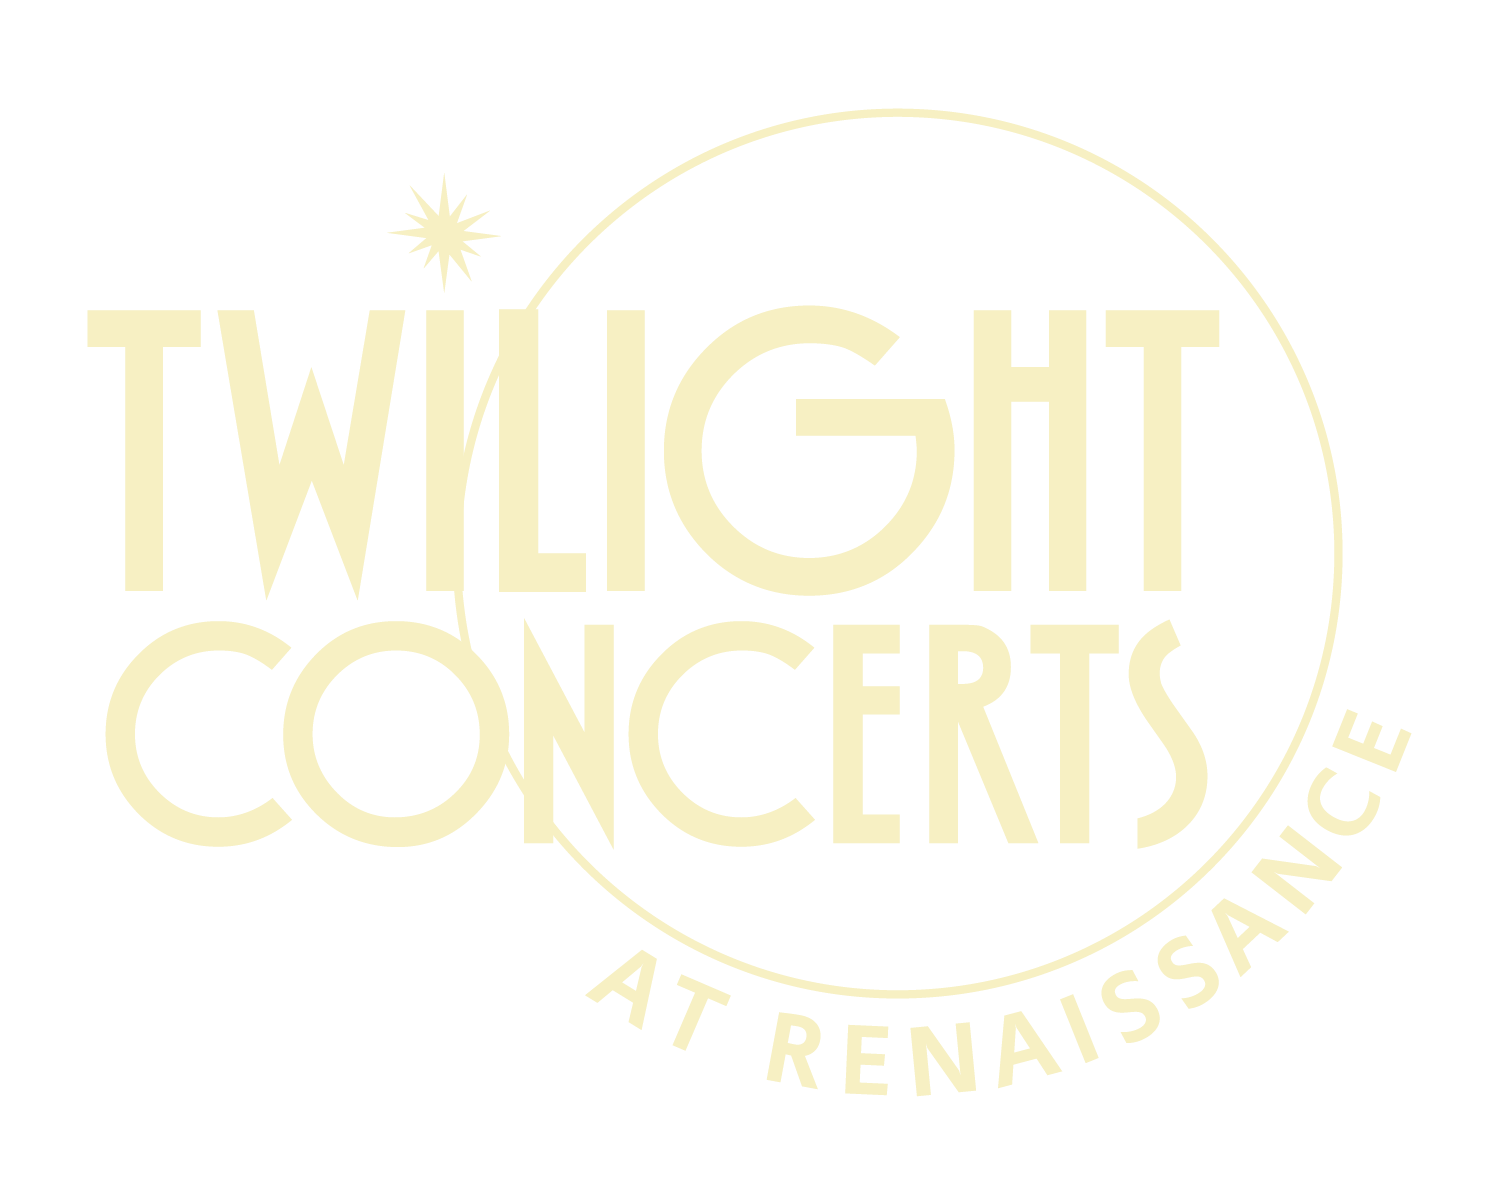 Twilight Concerts